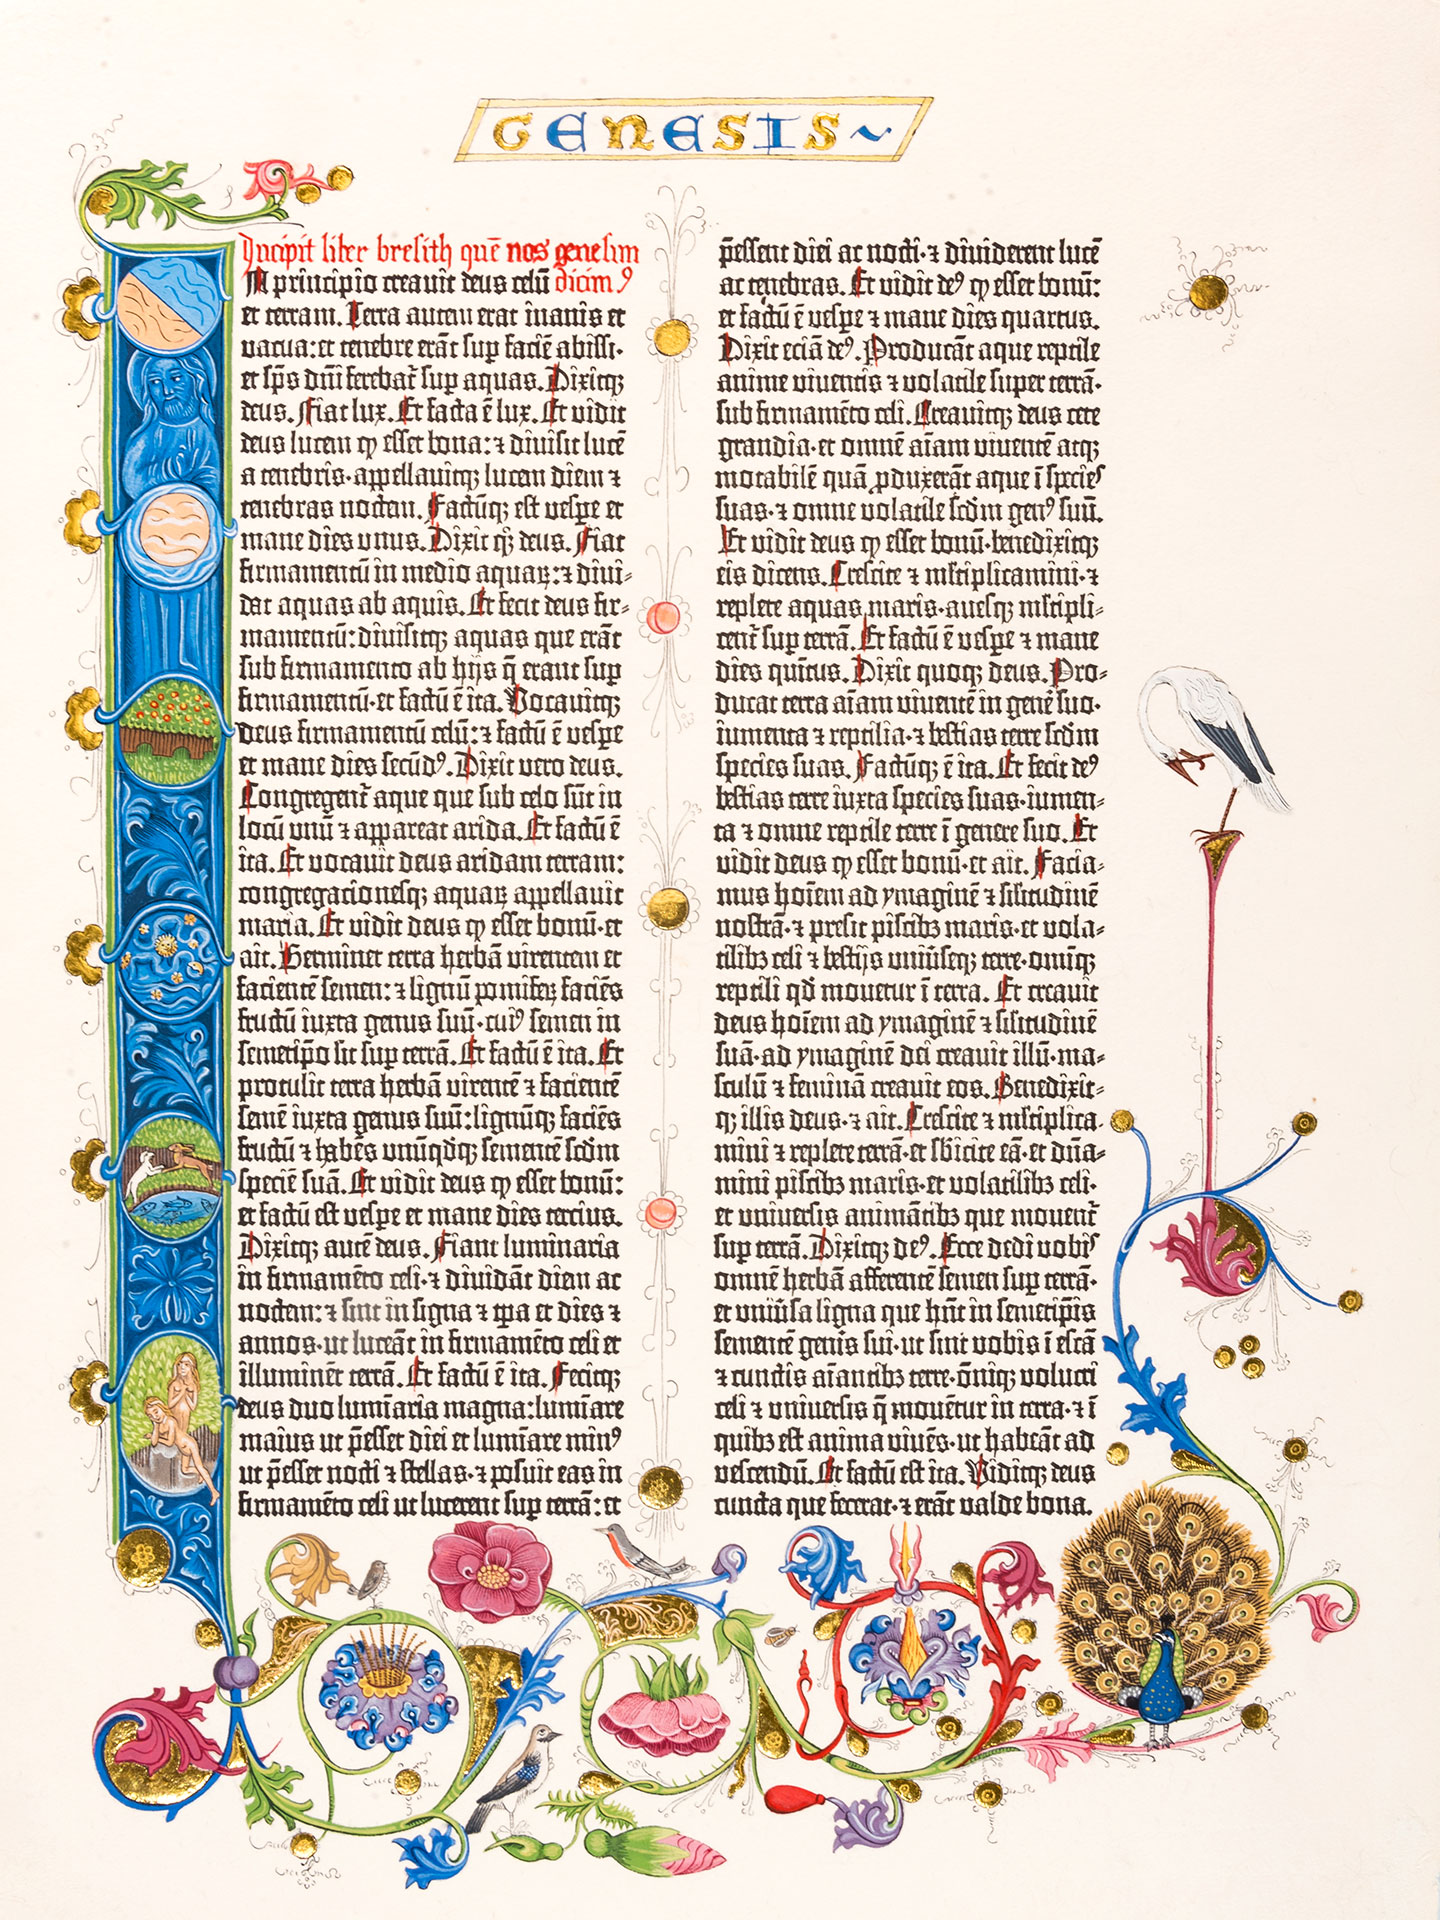 Genesis. Prachtseite Berliner Gutenberg-Bibel